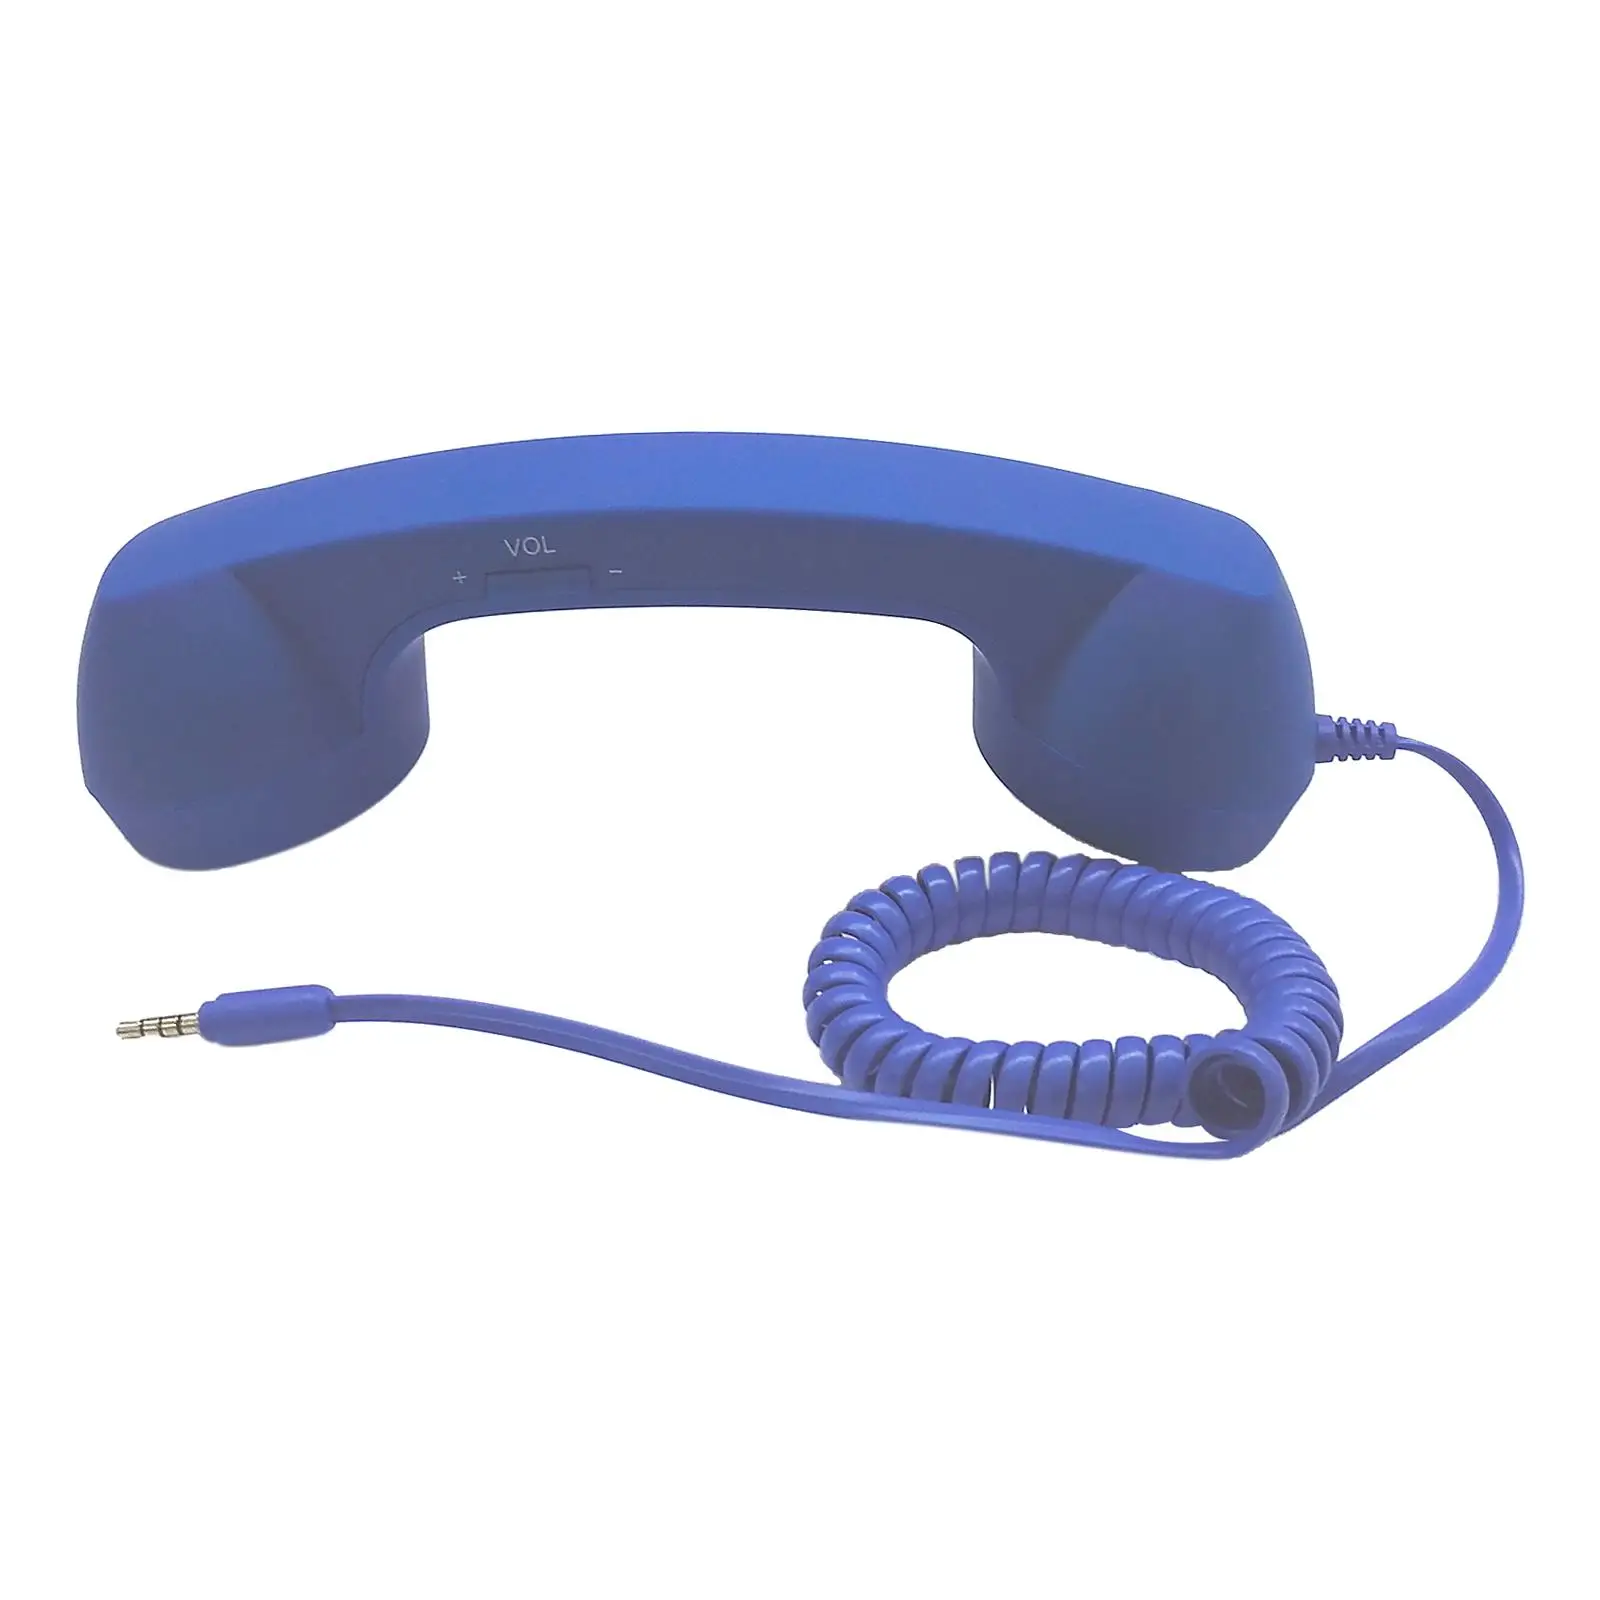 Retro Telephone Handset 3.5mm,  Stylish Mini Phone Call Receiver Microphone Speaker for 